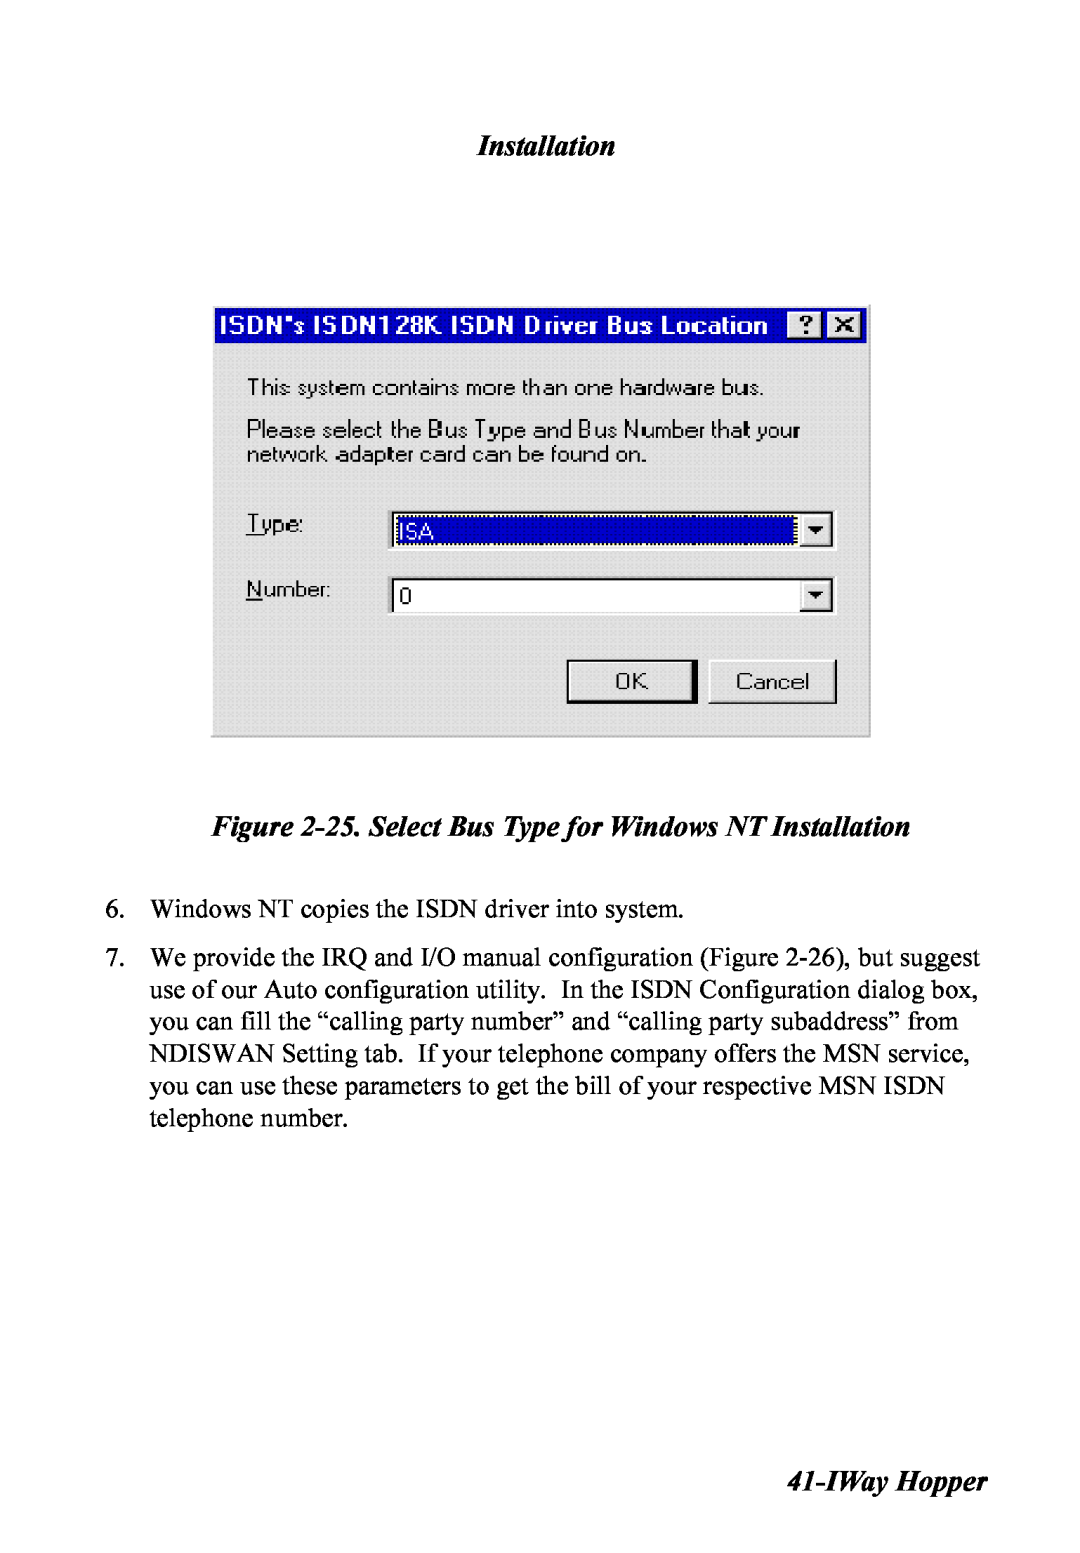 Multitech MT128ISA-SV, MT128ISA-SD, MT128ISA-UV Installation -25. Select Bus Type for Windows NT Installation, IWay Hopper 